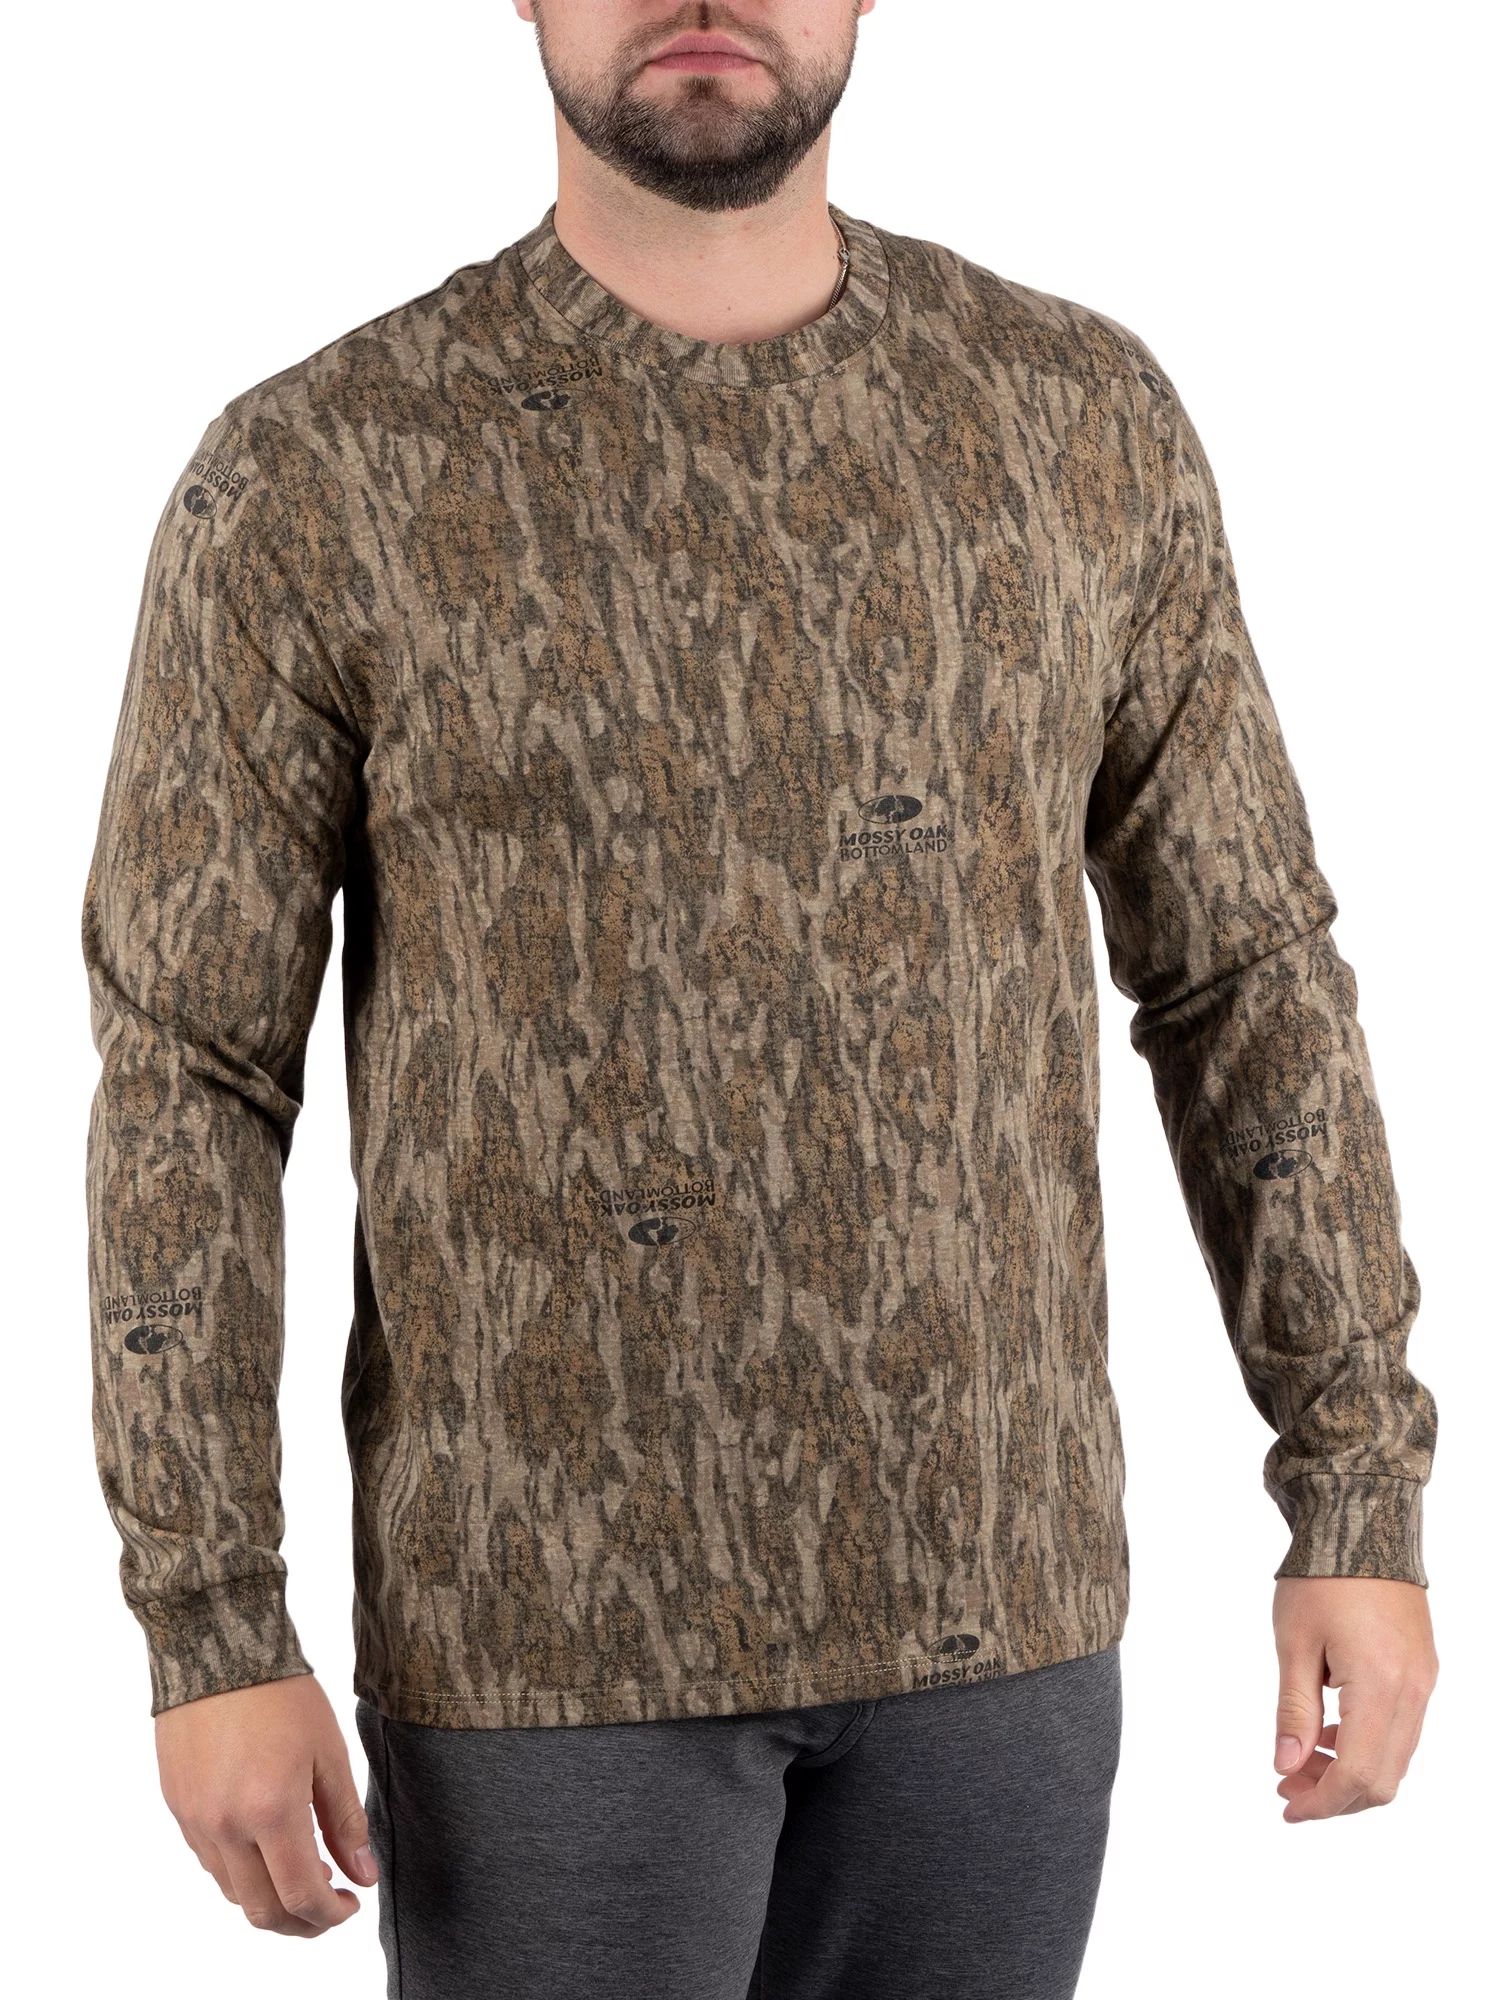 Men's Long Sleeve Camo Tee Scent Control Cotton Shirt by Mossy Oak, Sizes S-3XL | Walmart (US)